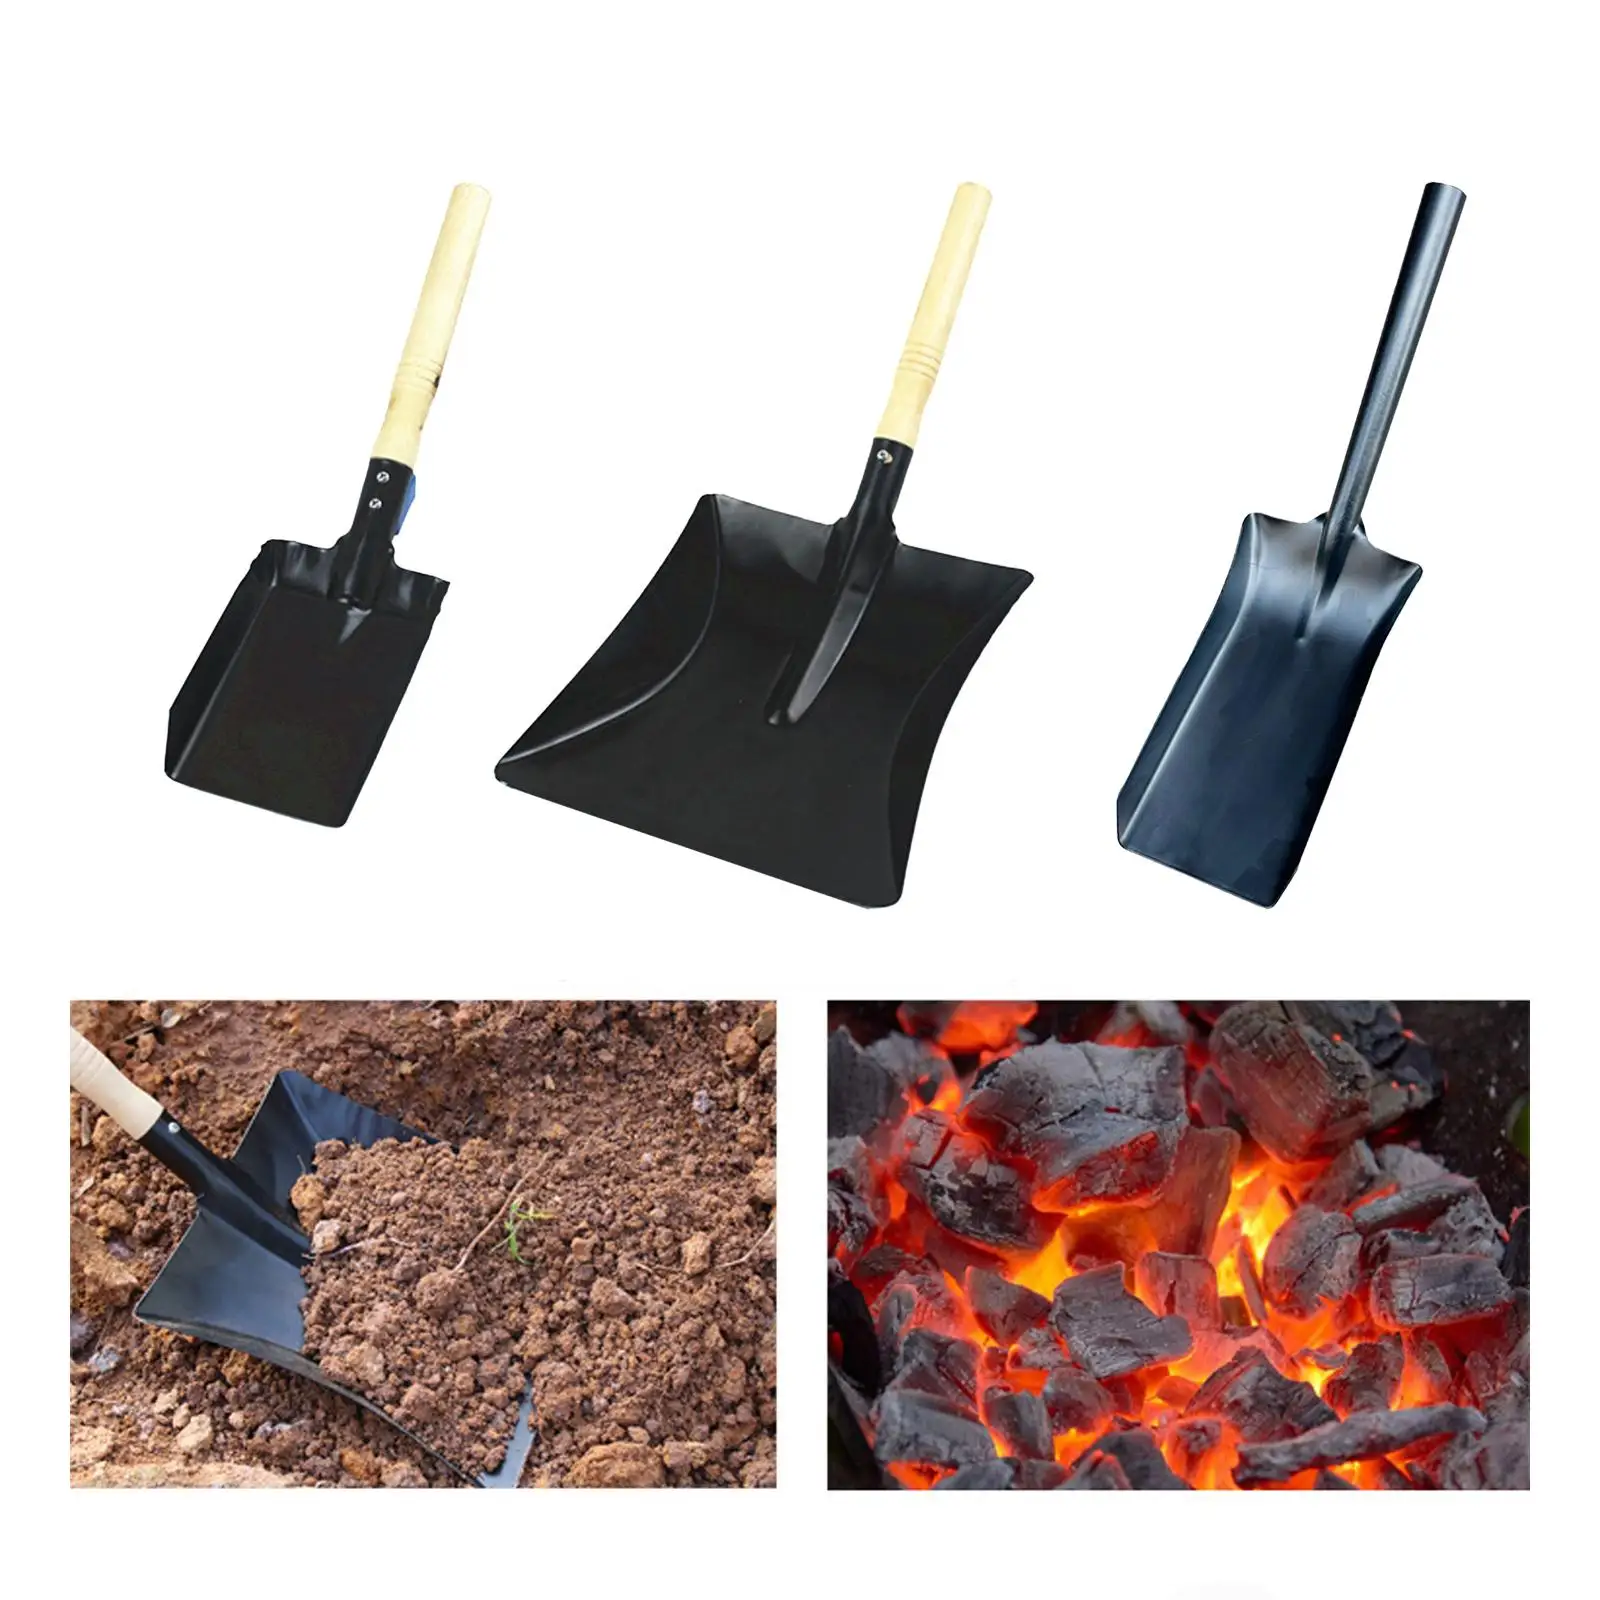 Multifunctional Shovel Iorn Portable Gear Survival Camping Axe Digging Trench Gardening Tool Garden Emergency Ash Shovel Pets